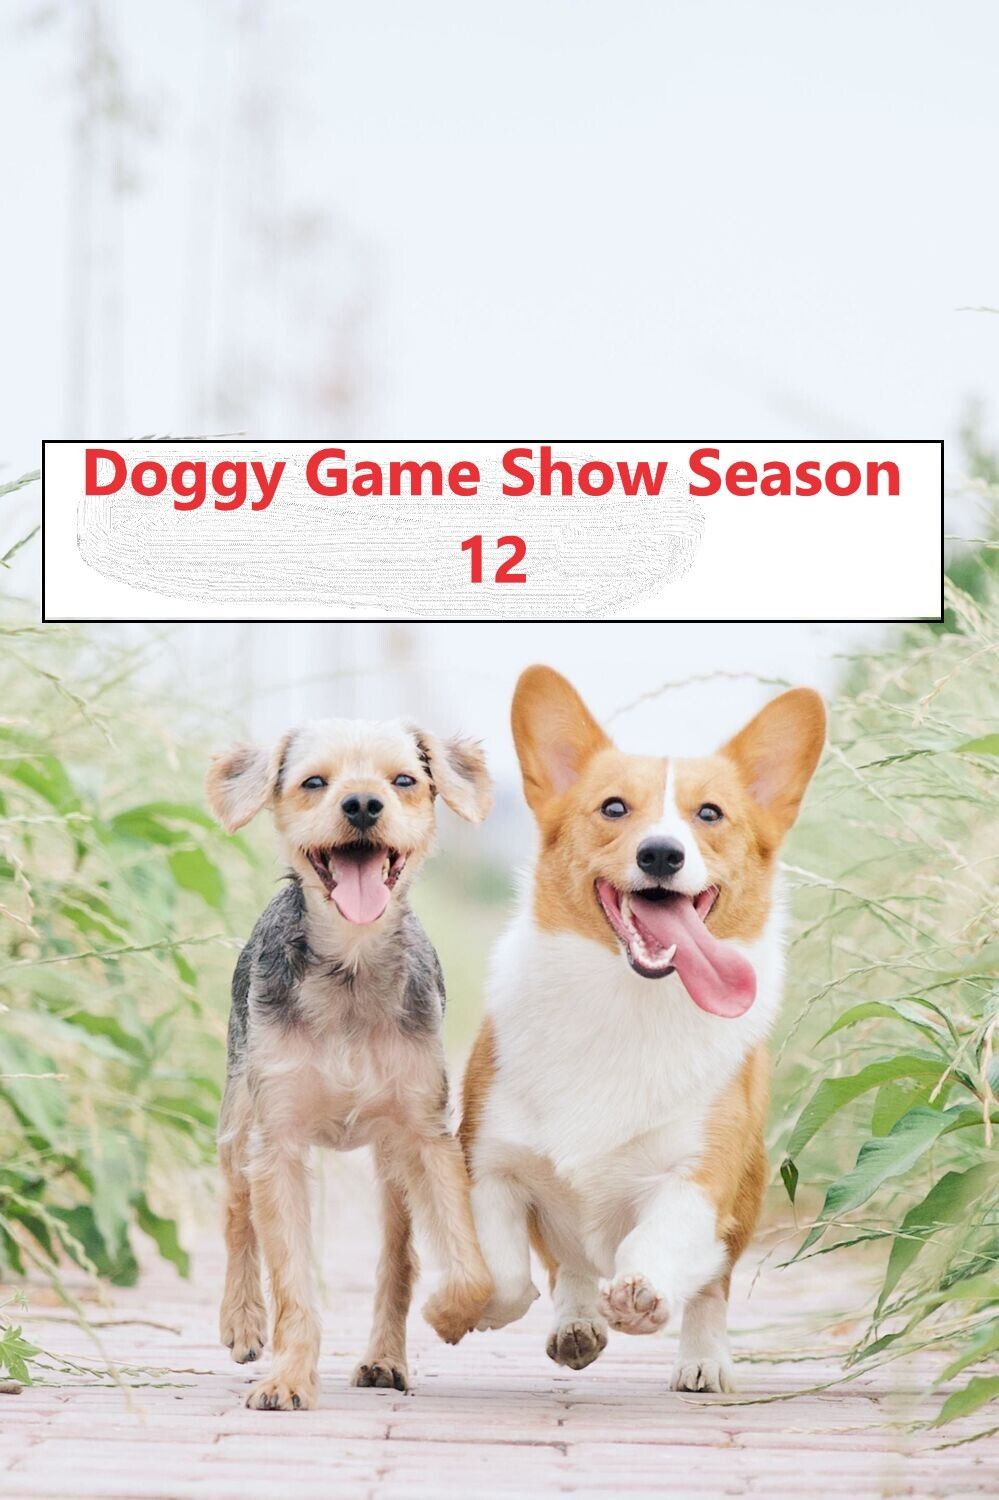 Doggy Game Show Season 12. Fridays 7:30pm (Starts June 7)
Trainer: Rebecca Gordineer